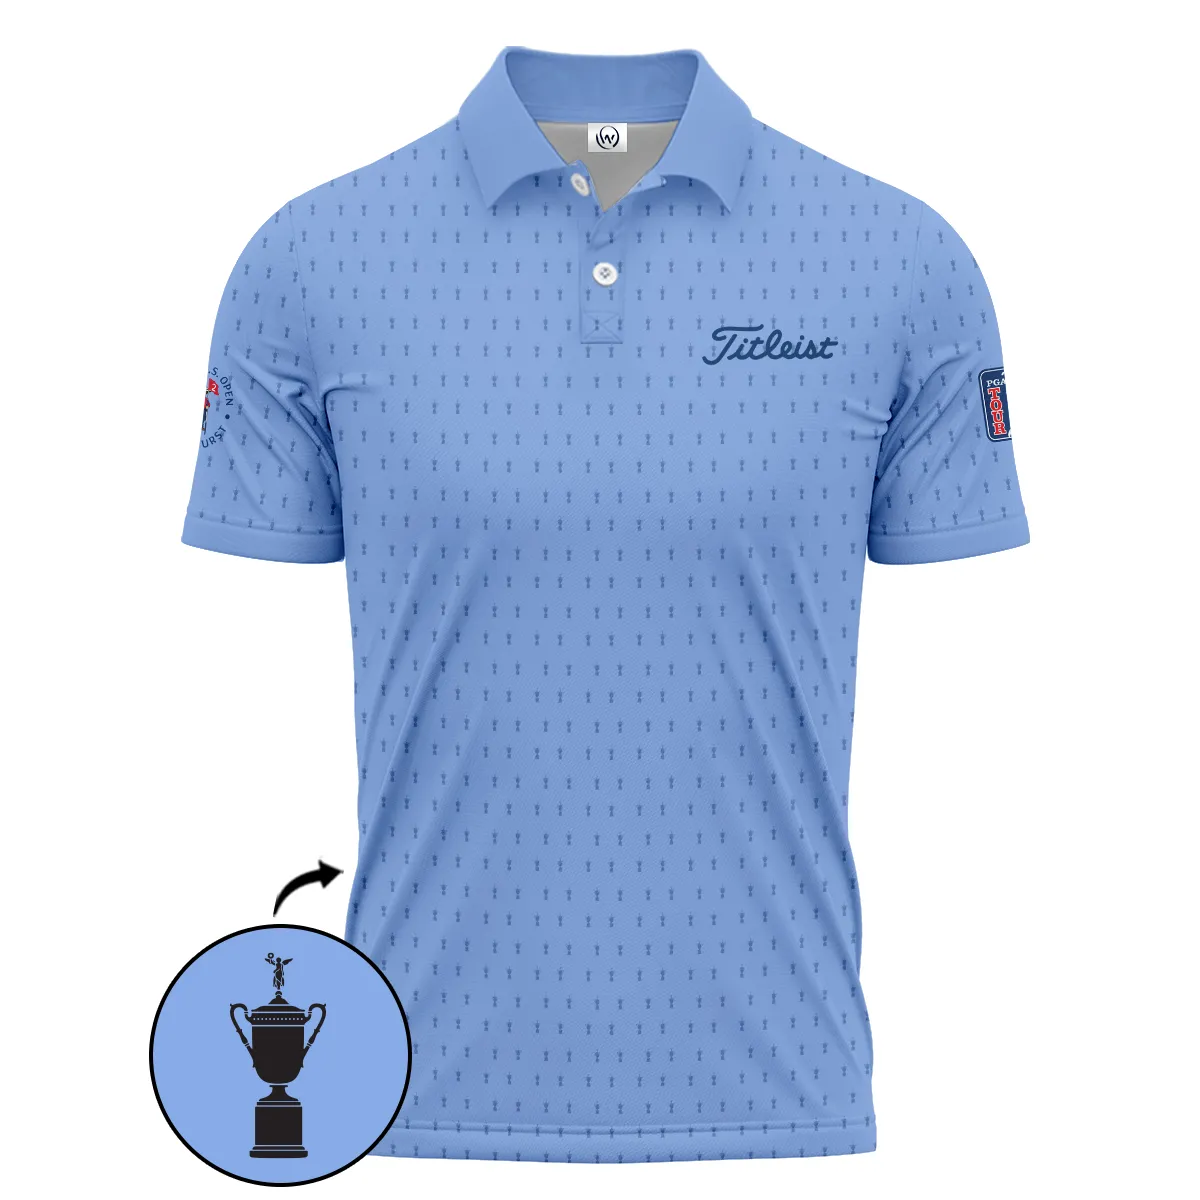 Golf Pattern Cup Blue 124th U.S. Open Pinehurst Pinehurst Titleist Performance T-Shirt Style Classic